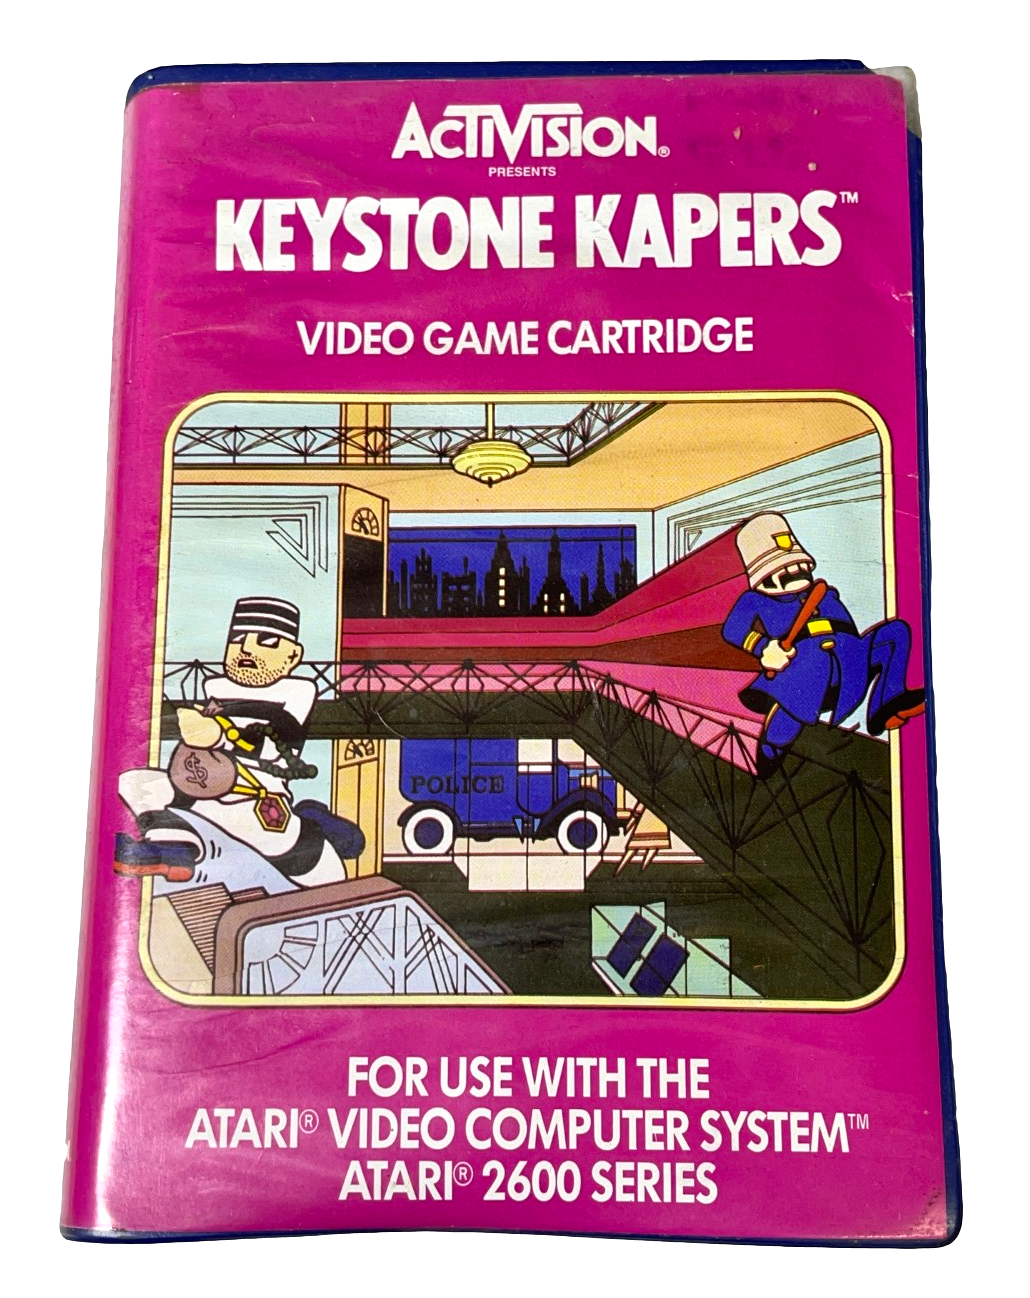 Keystone Kapers Review